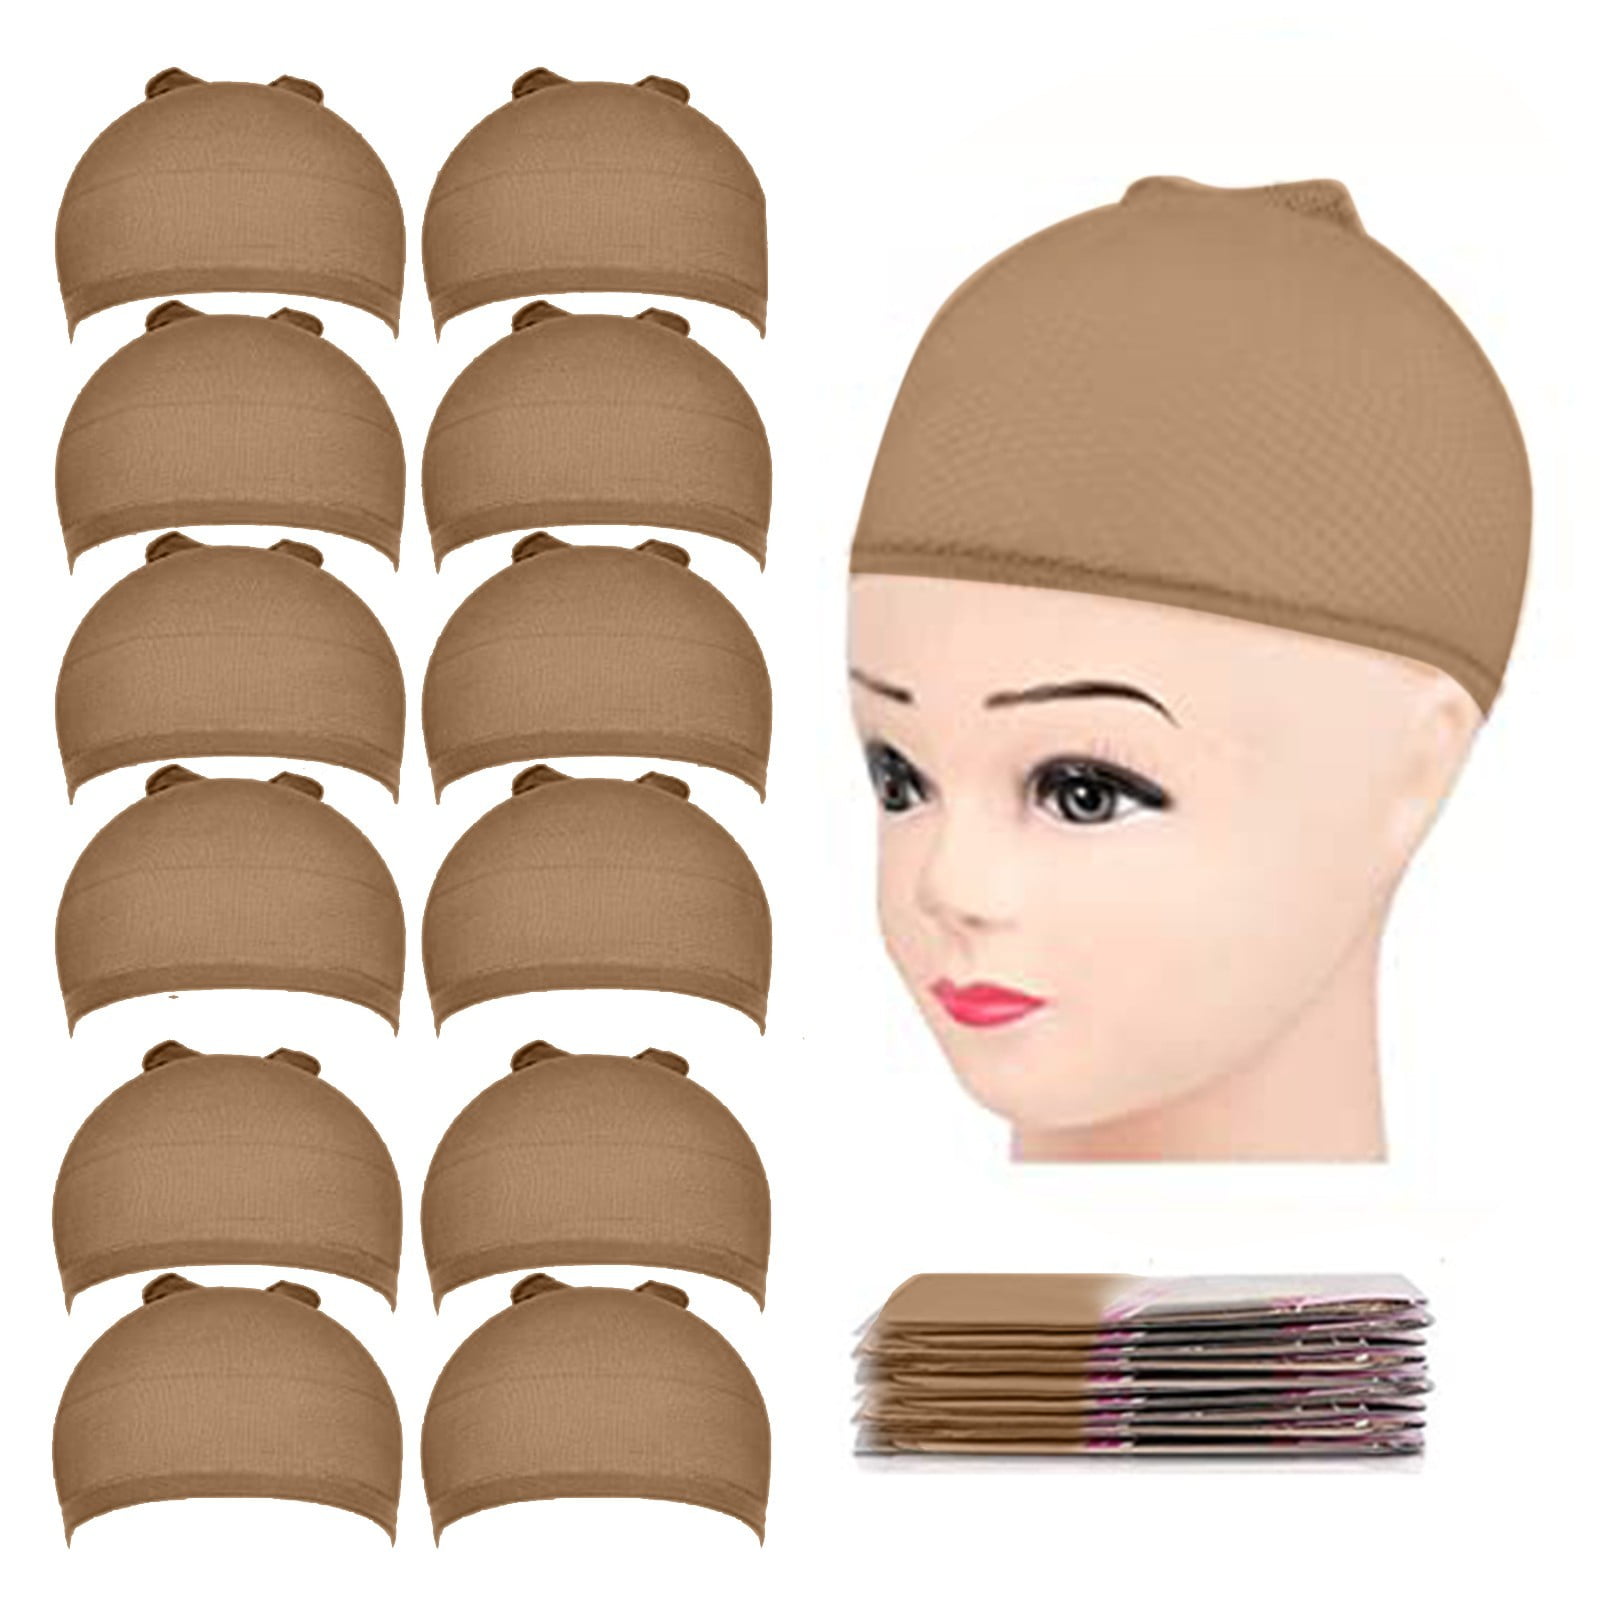 Hair Mesh Wig Cap Hair Net Stocking Wig Caps for Women 12 Pack